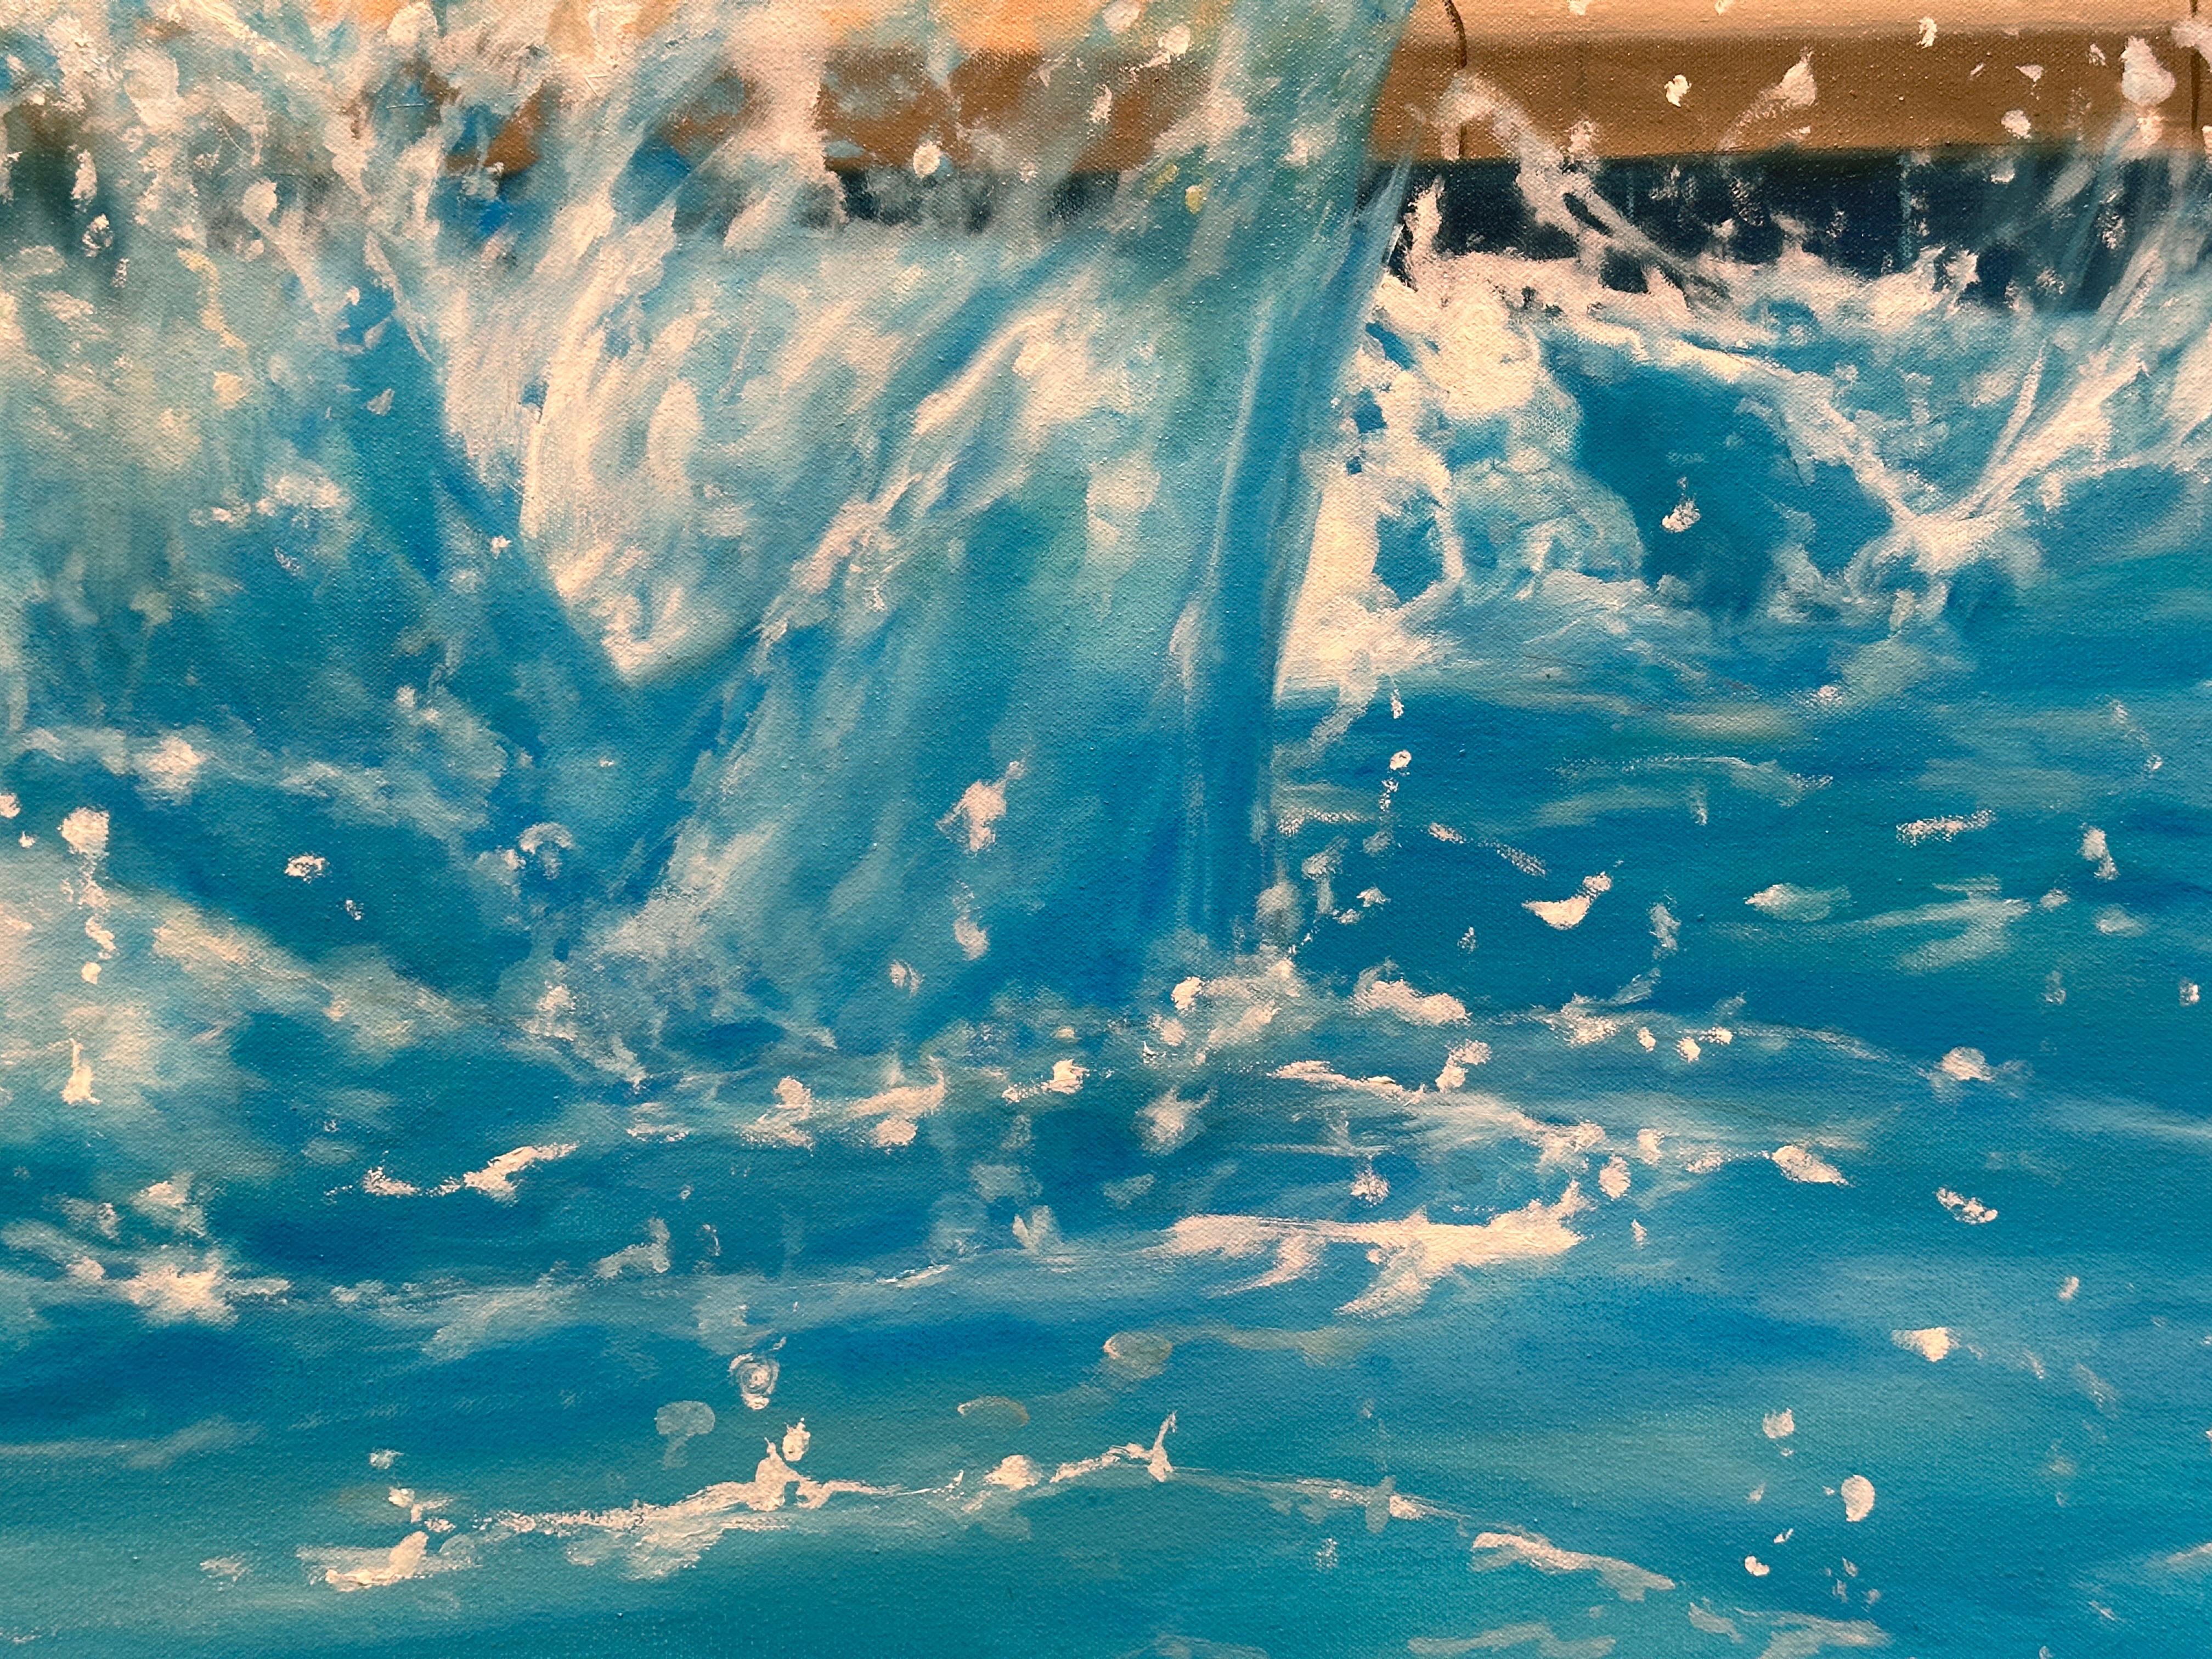 ECITO MORNING – Zeitgenössischer Realismus / Pool-Wasserszene / California Vibe im Angebot 2